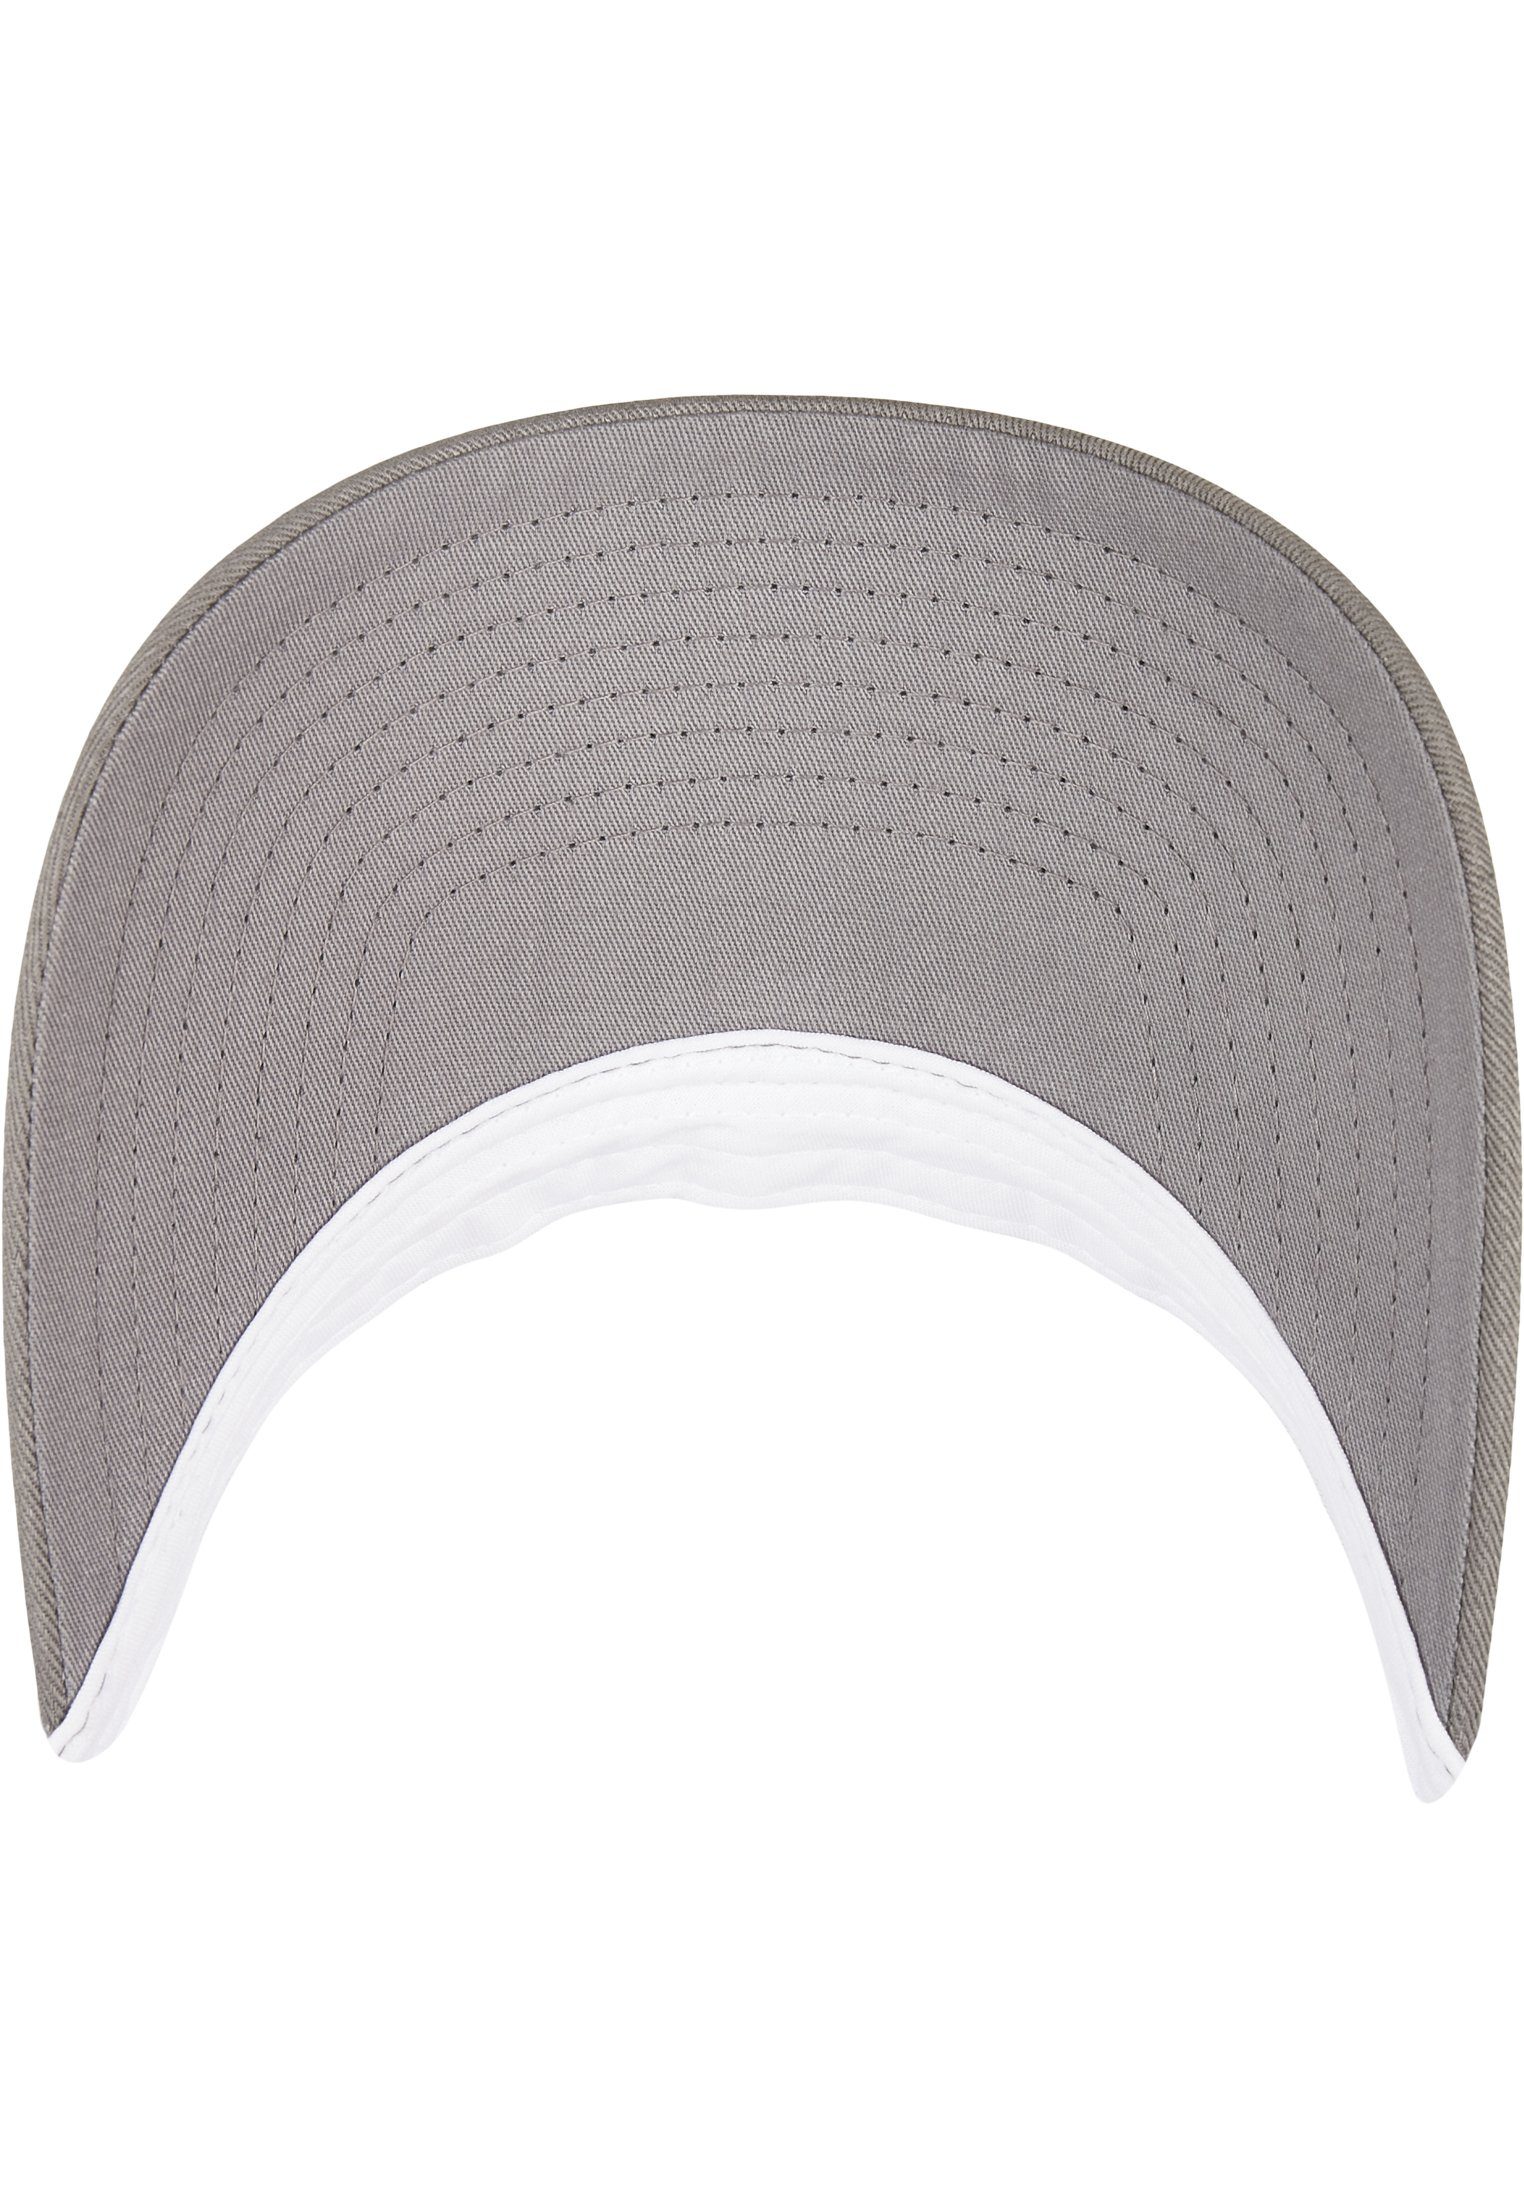 Flexfit Flex Cap YP Caps CAP CLASSICS grey/white 2-TONE TRUCKER RETRO RECYCLED